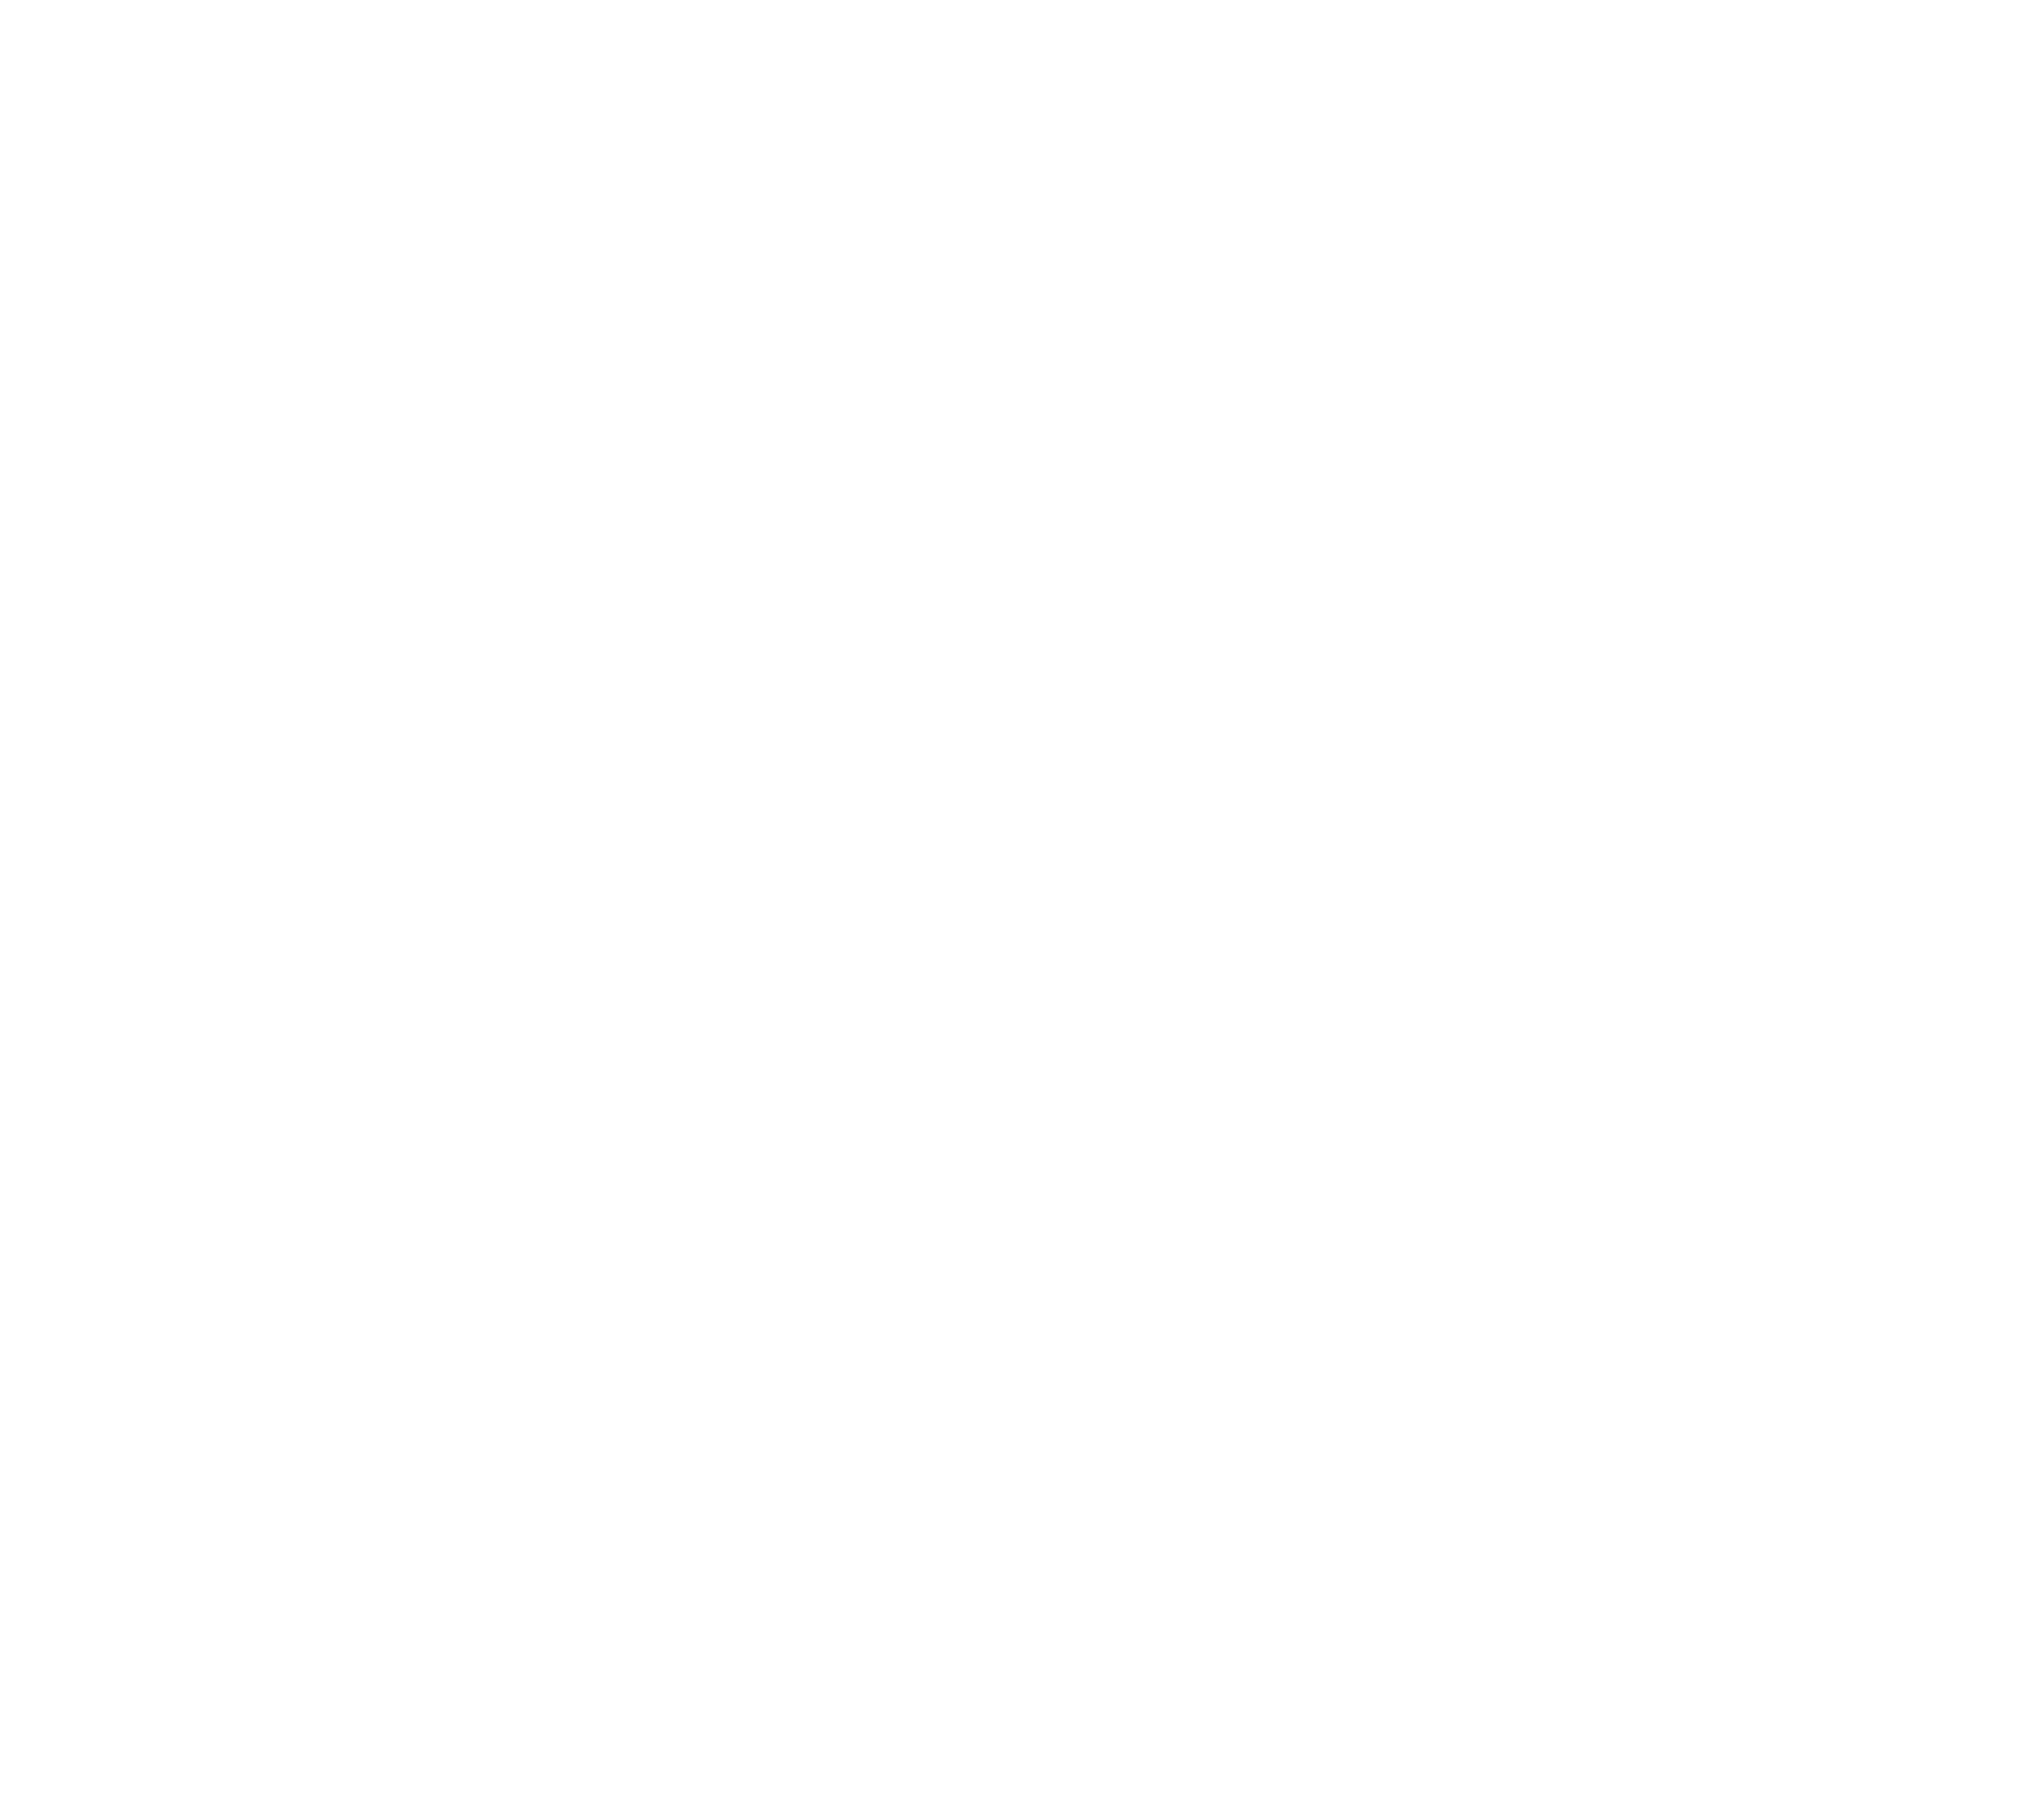 Madison Ivers